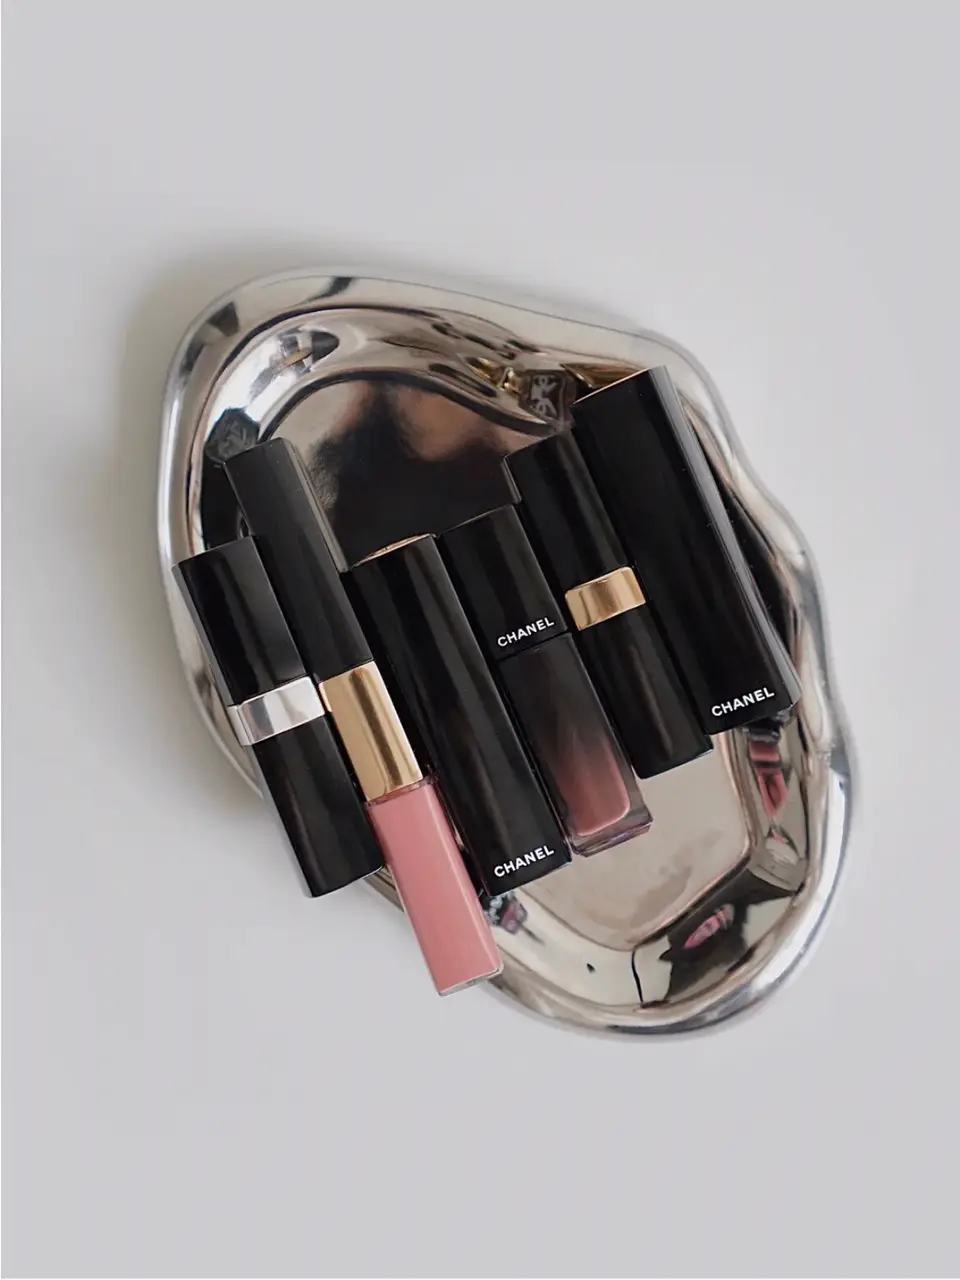 Chanel Lipstick: My 6 Favorite Shades👄